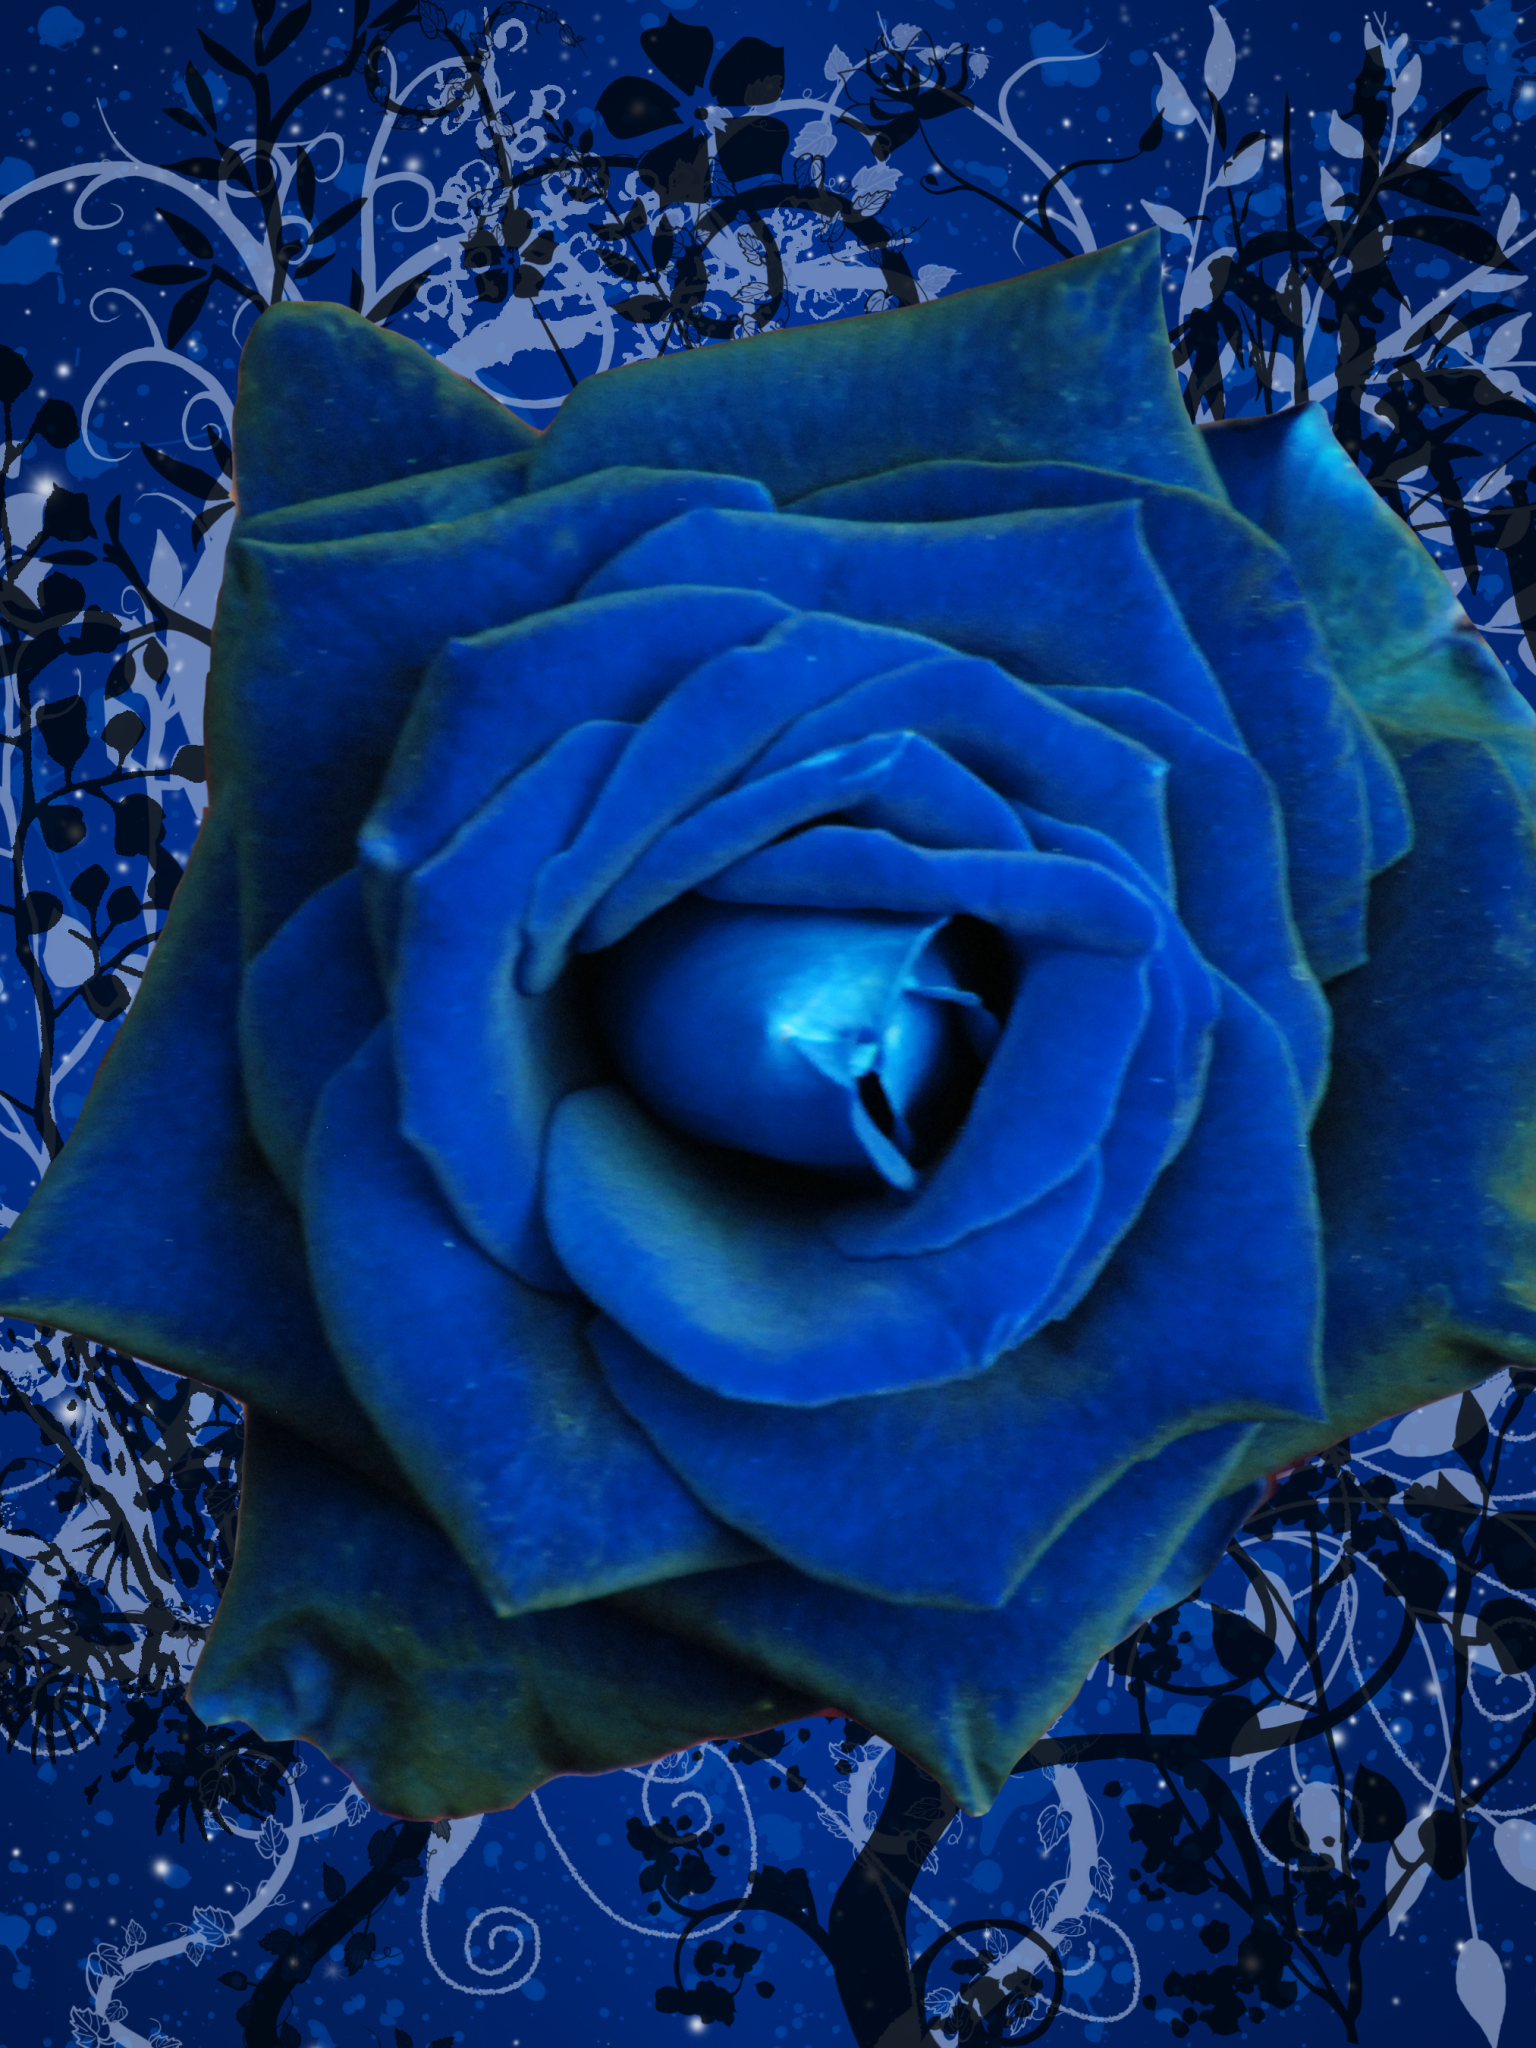 artistic, rose, flower, blue flower, blue rose